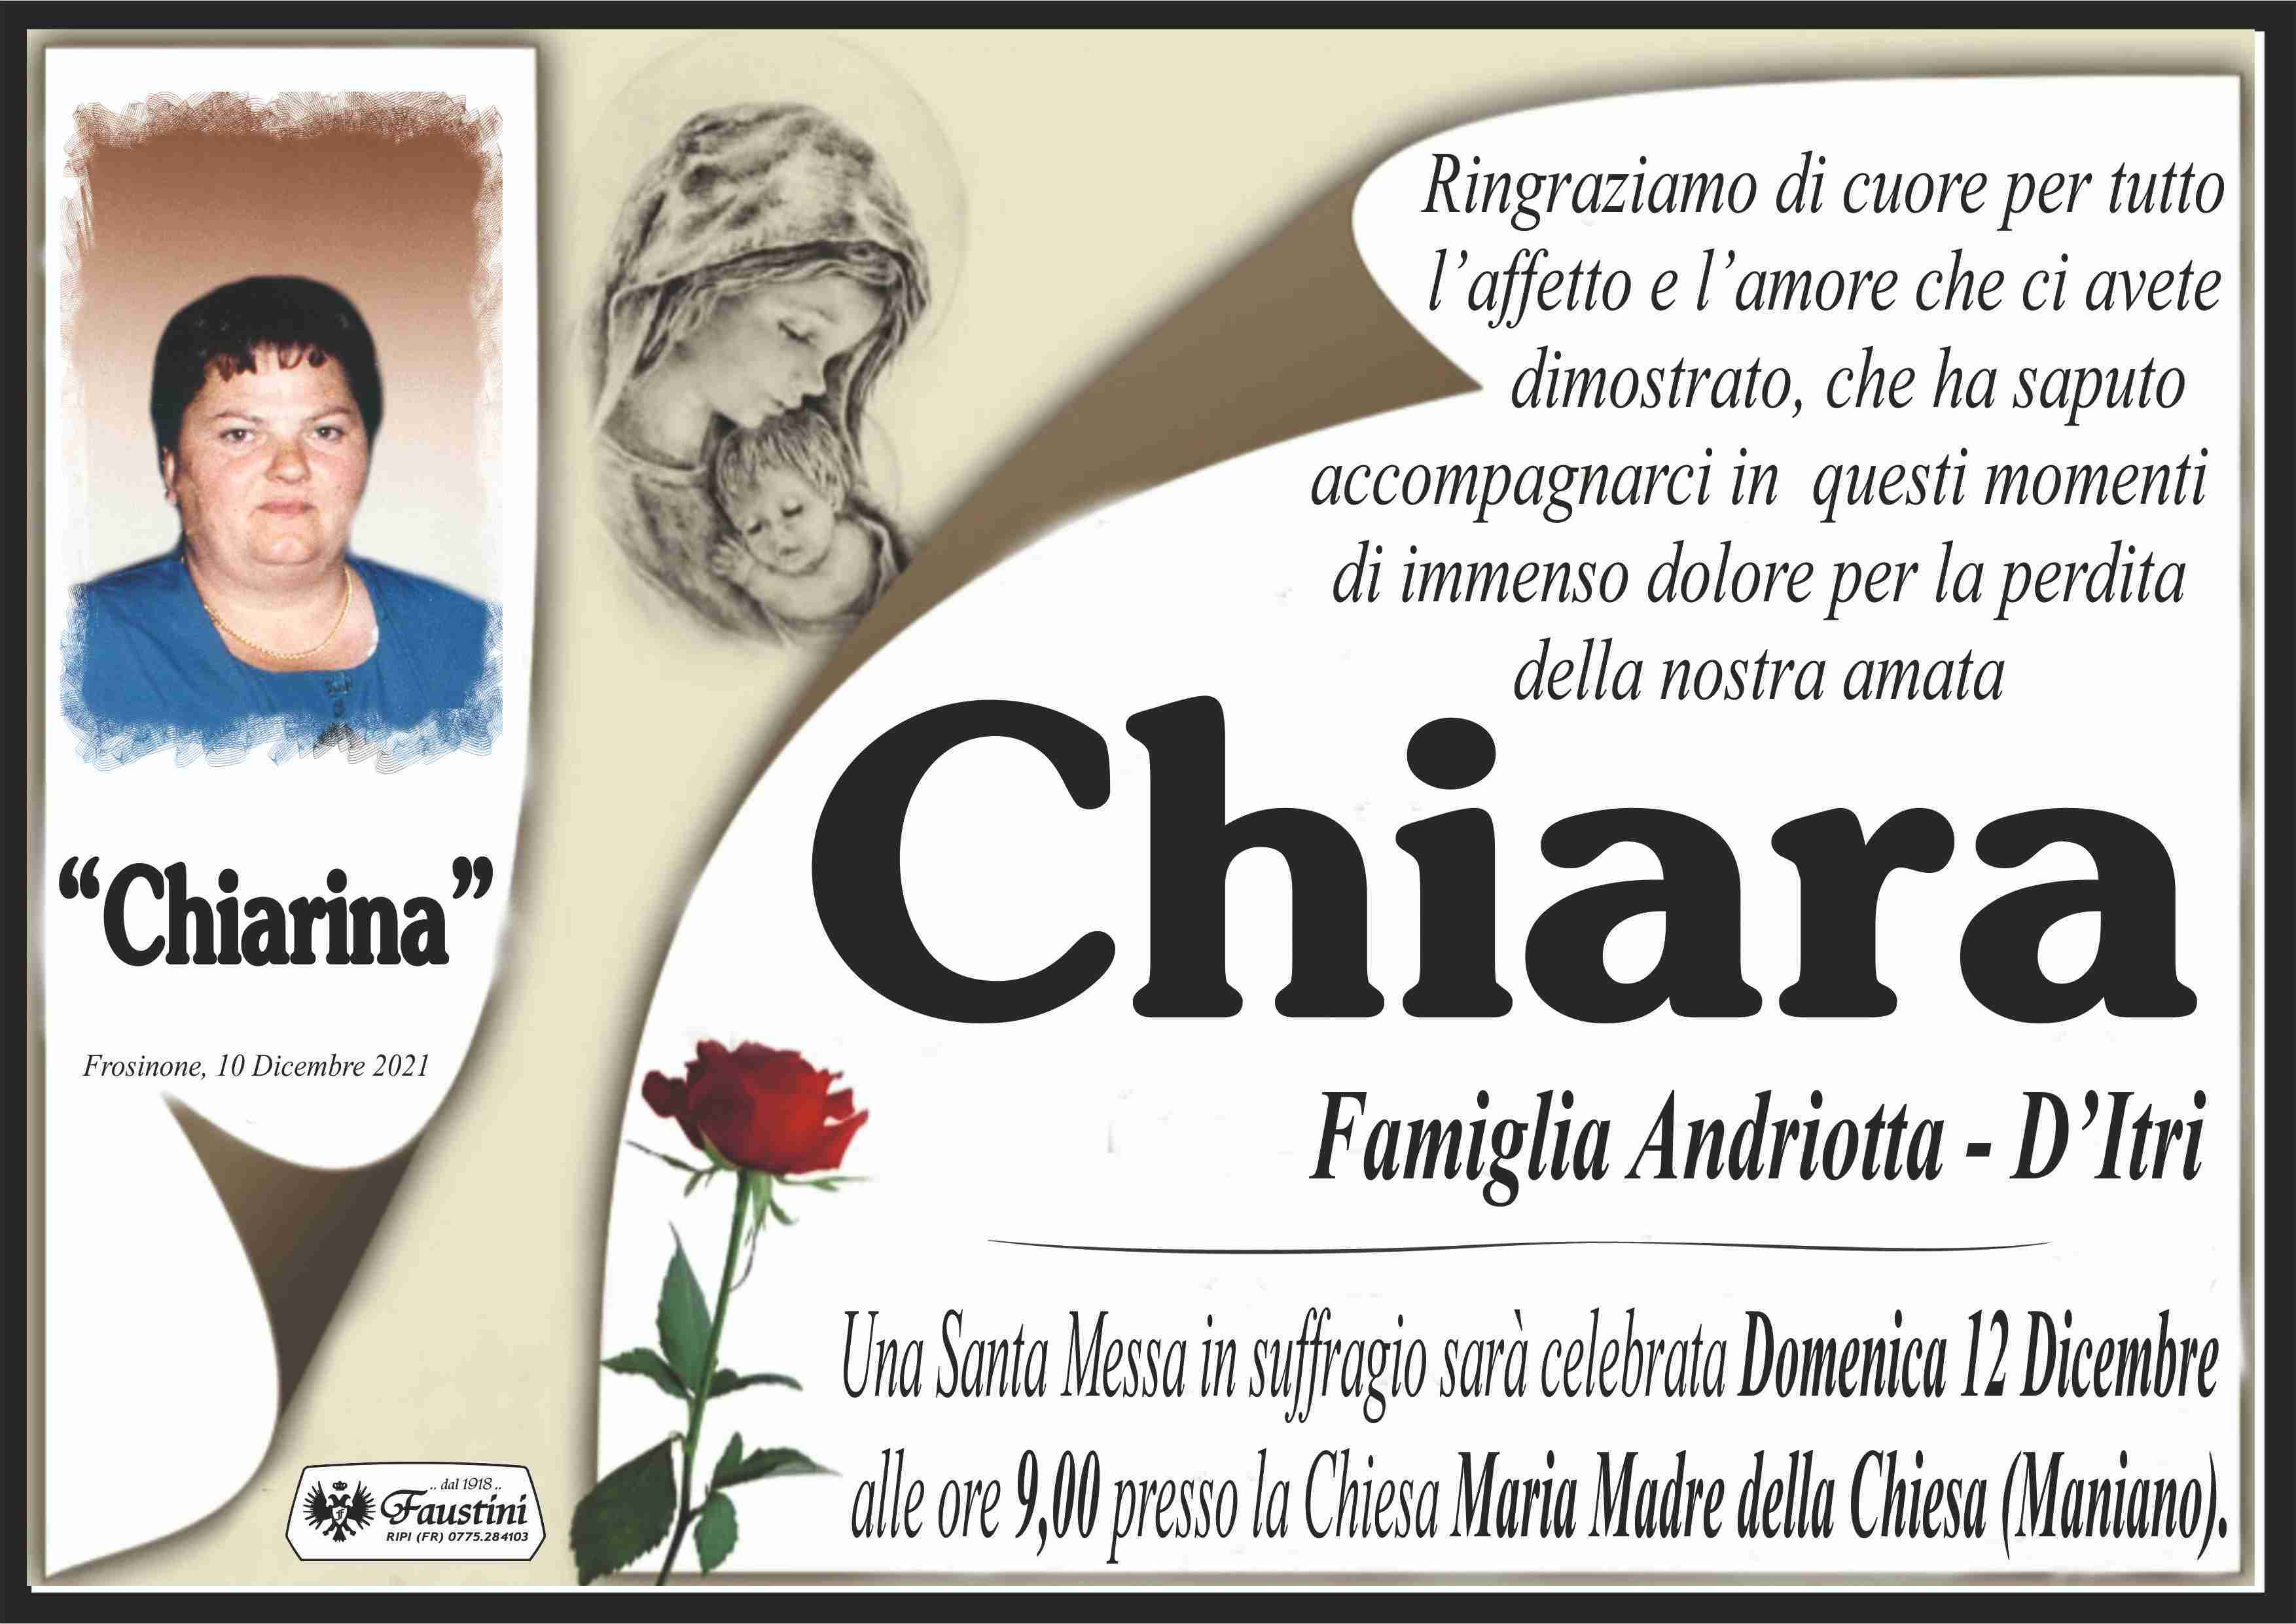 Chiara D'Itri